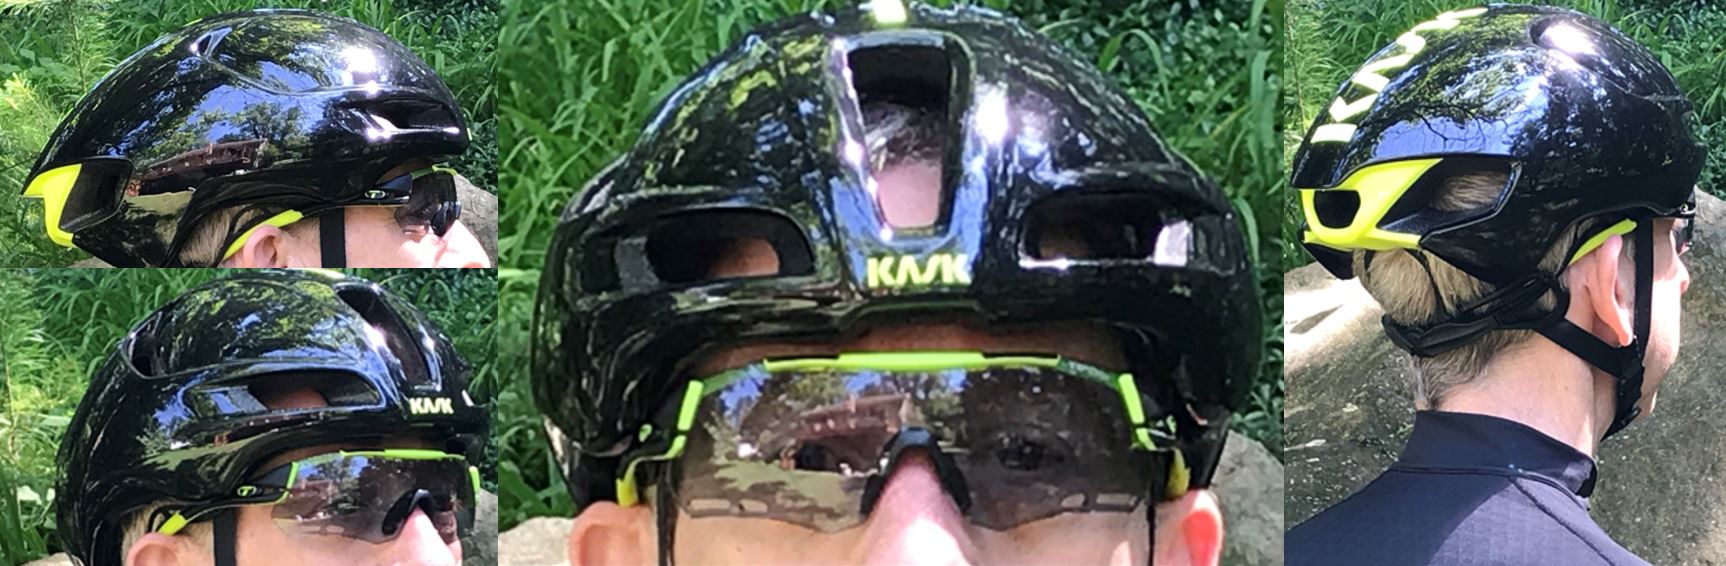 BLACK MATTE NEW 2020 Kask UTOPIA Aero Road Cycling Helmet 